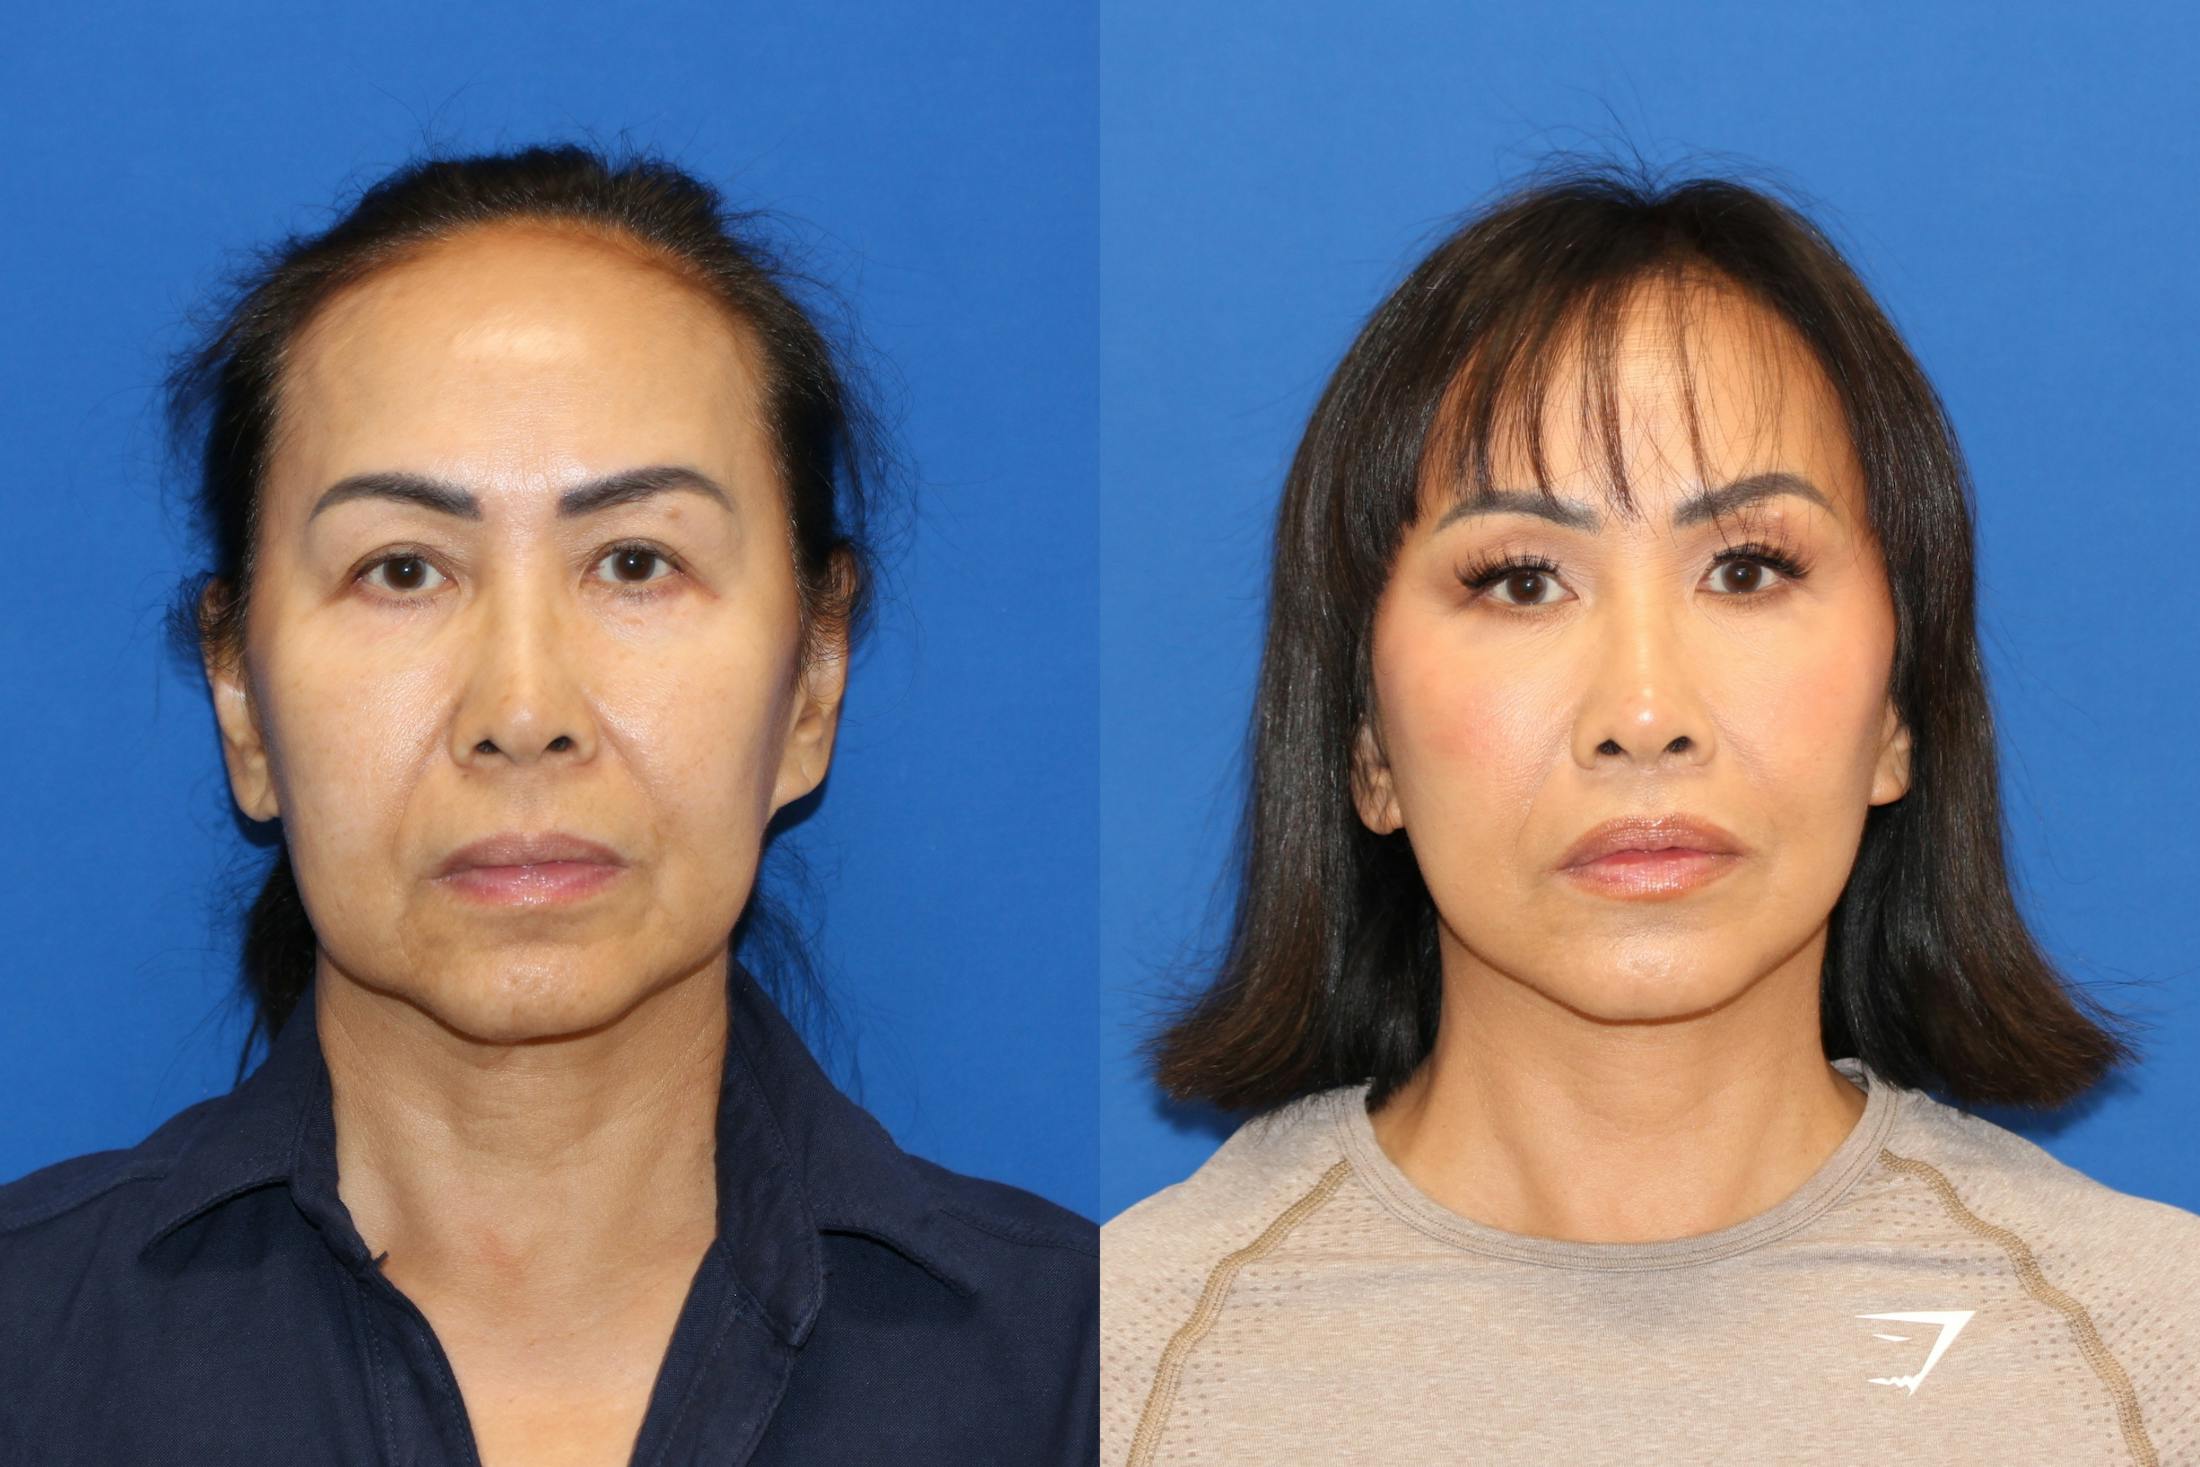 Vertical Restore® / Facial Rejuvenation Before & After Gallery - Patient 153265713 - Image 2